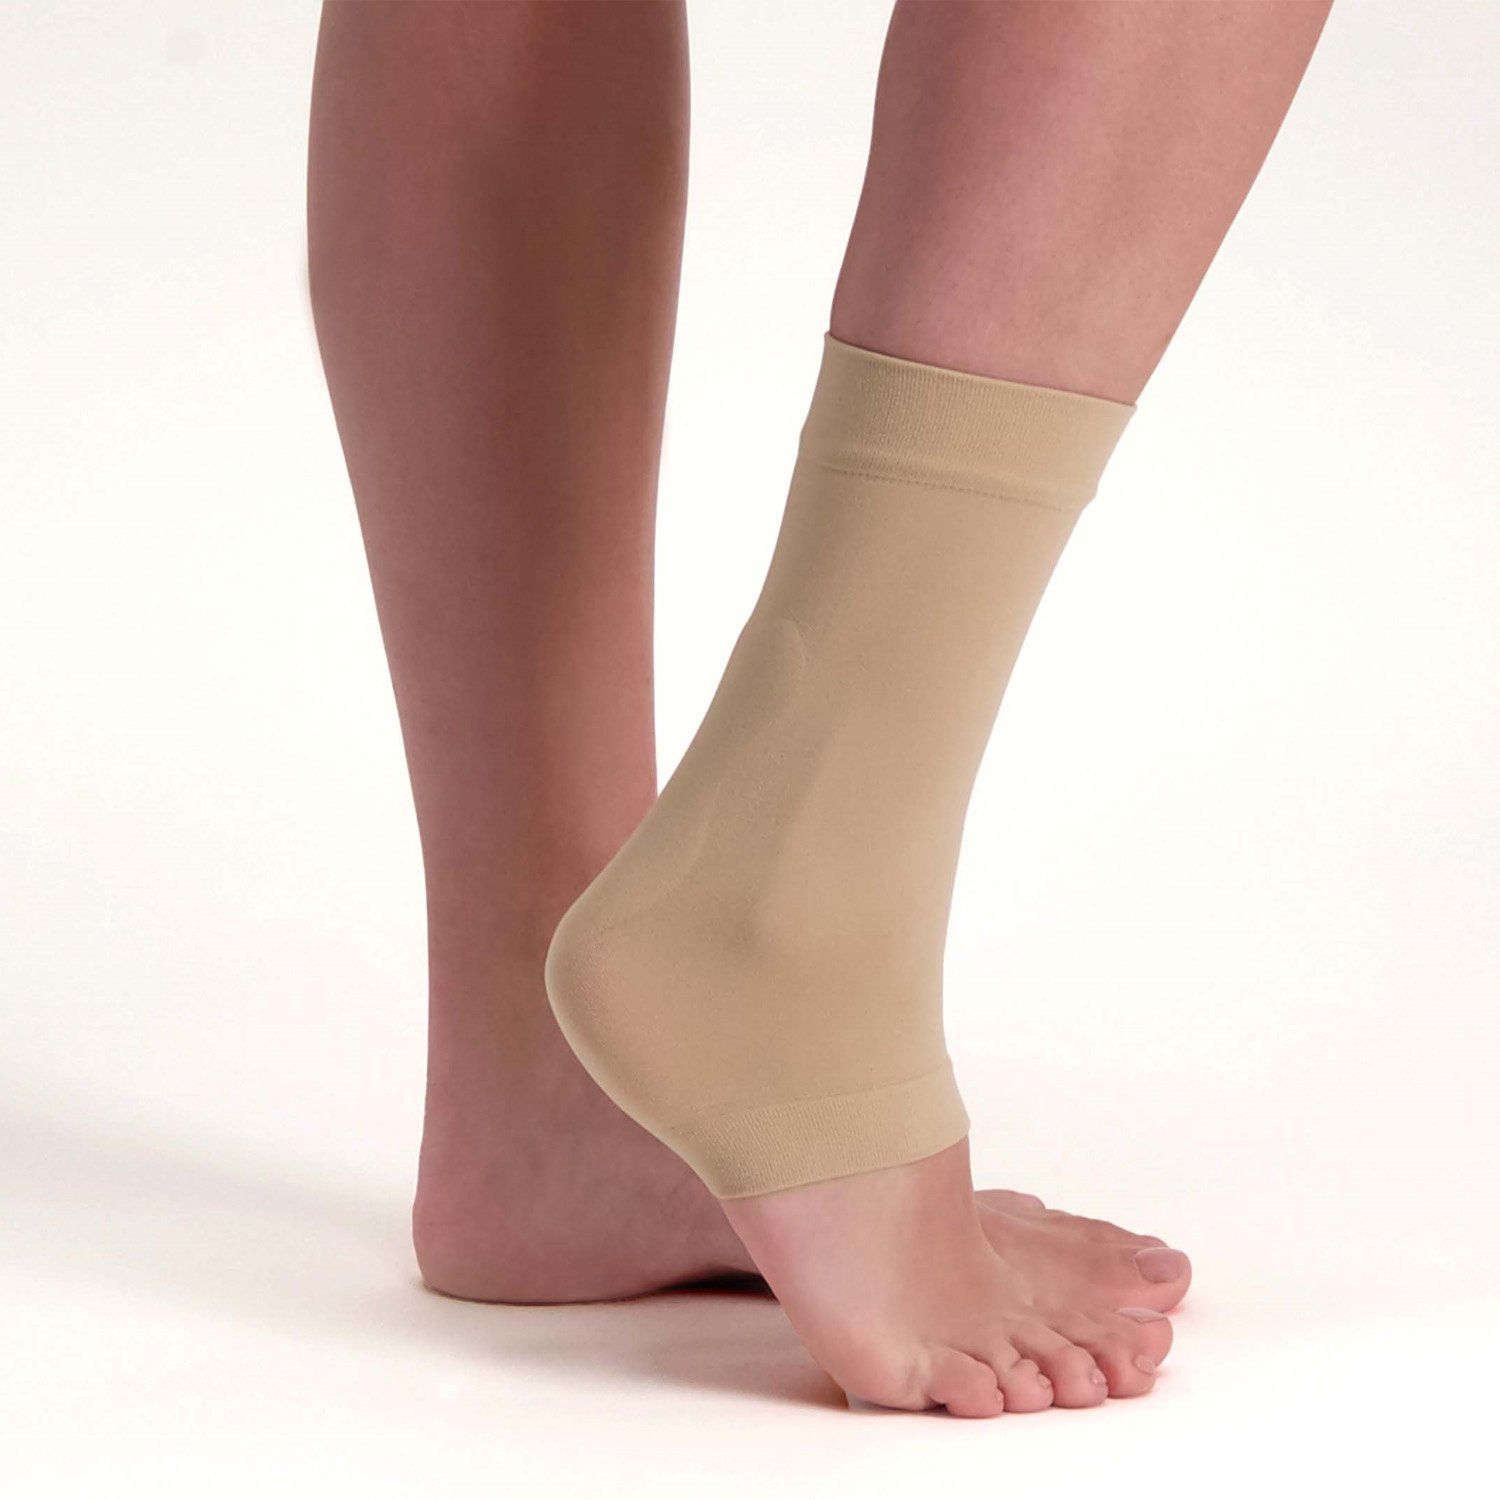 solelution achilles tendon gel sock back view